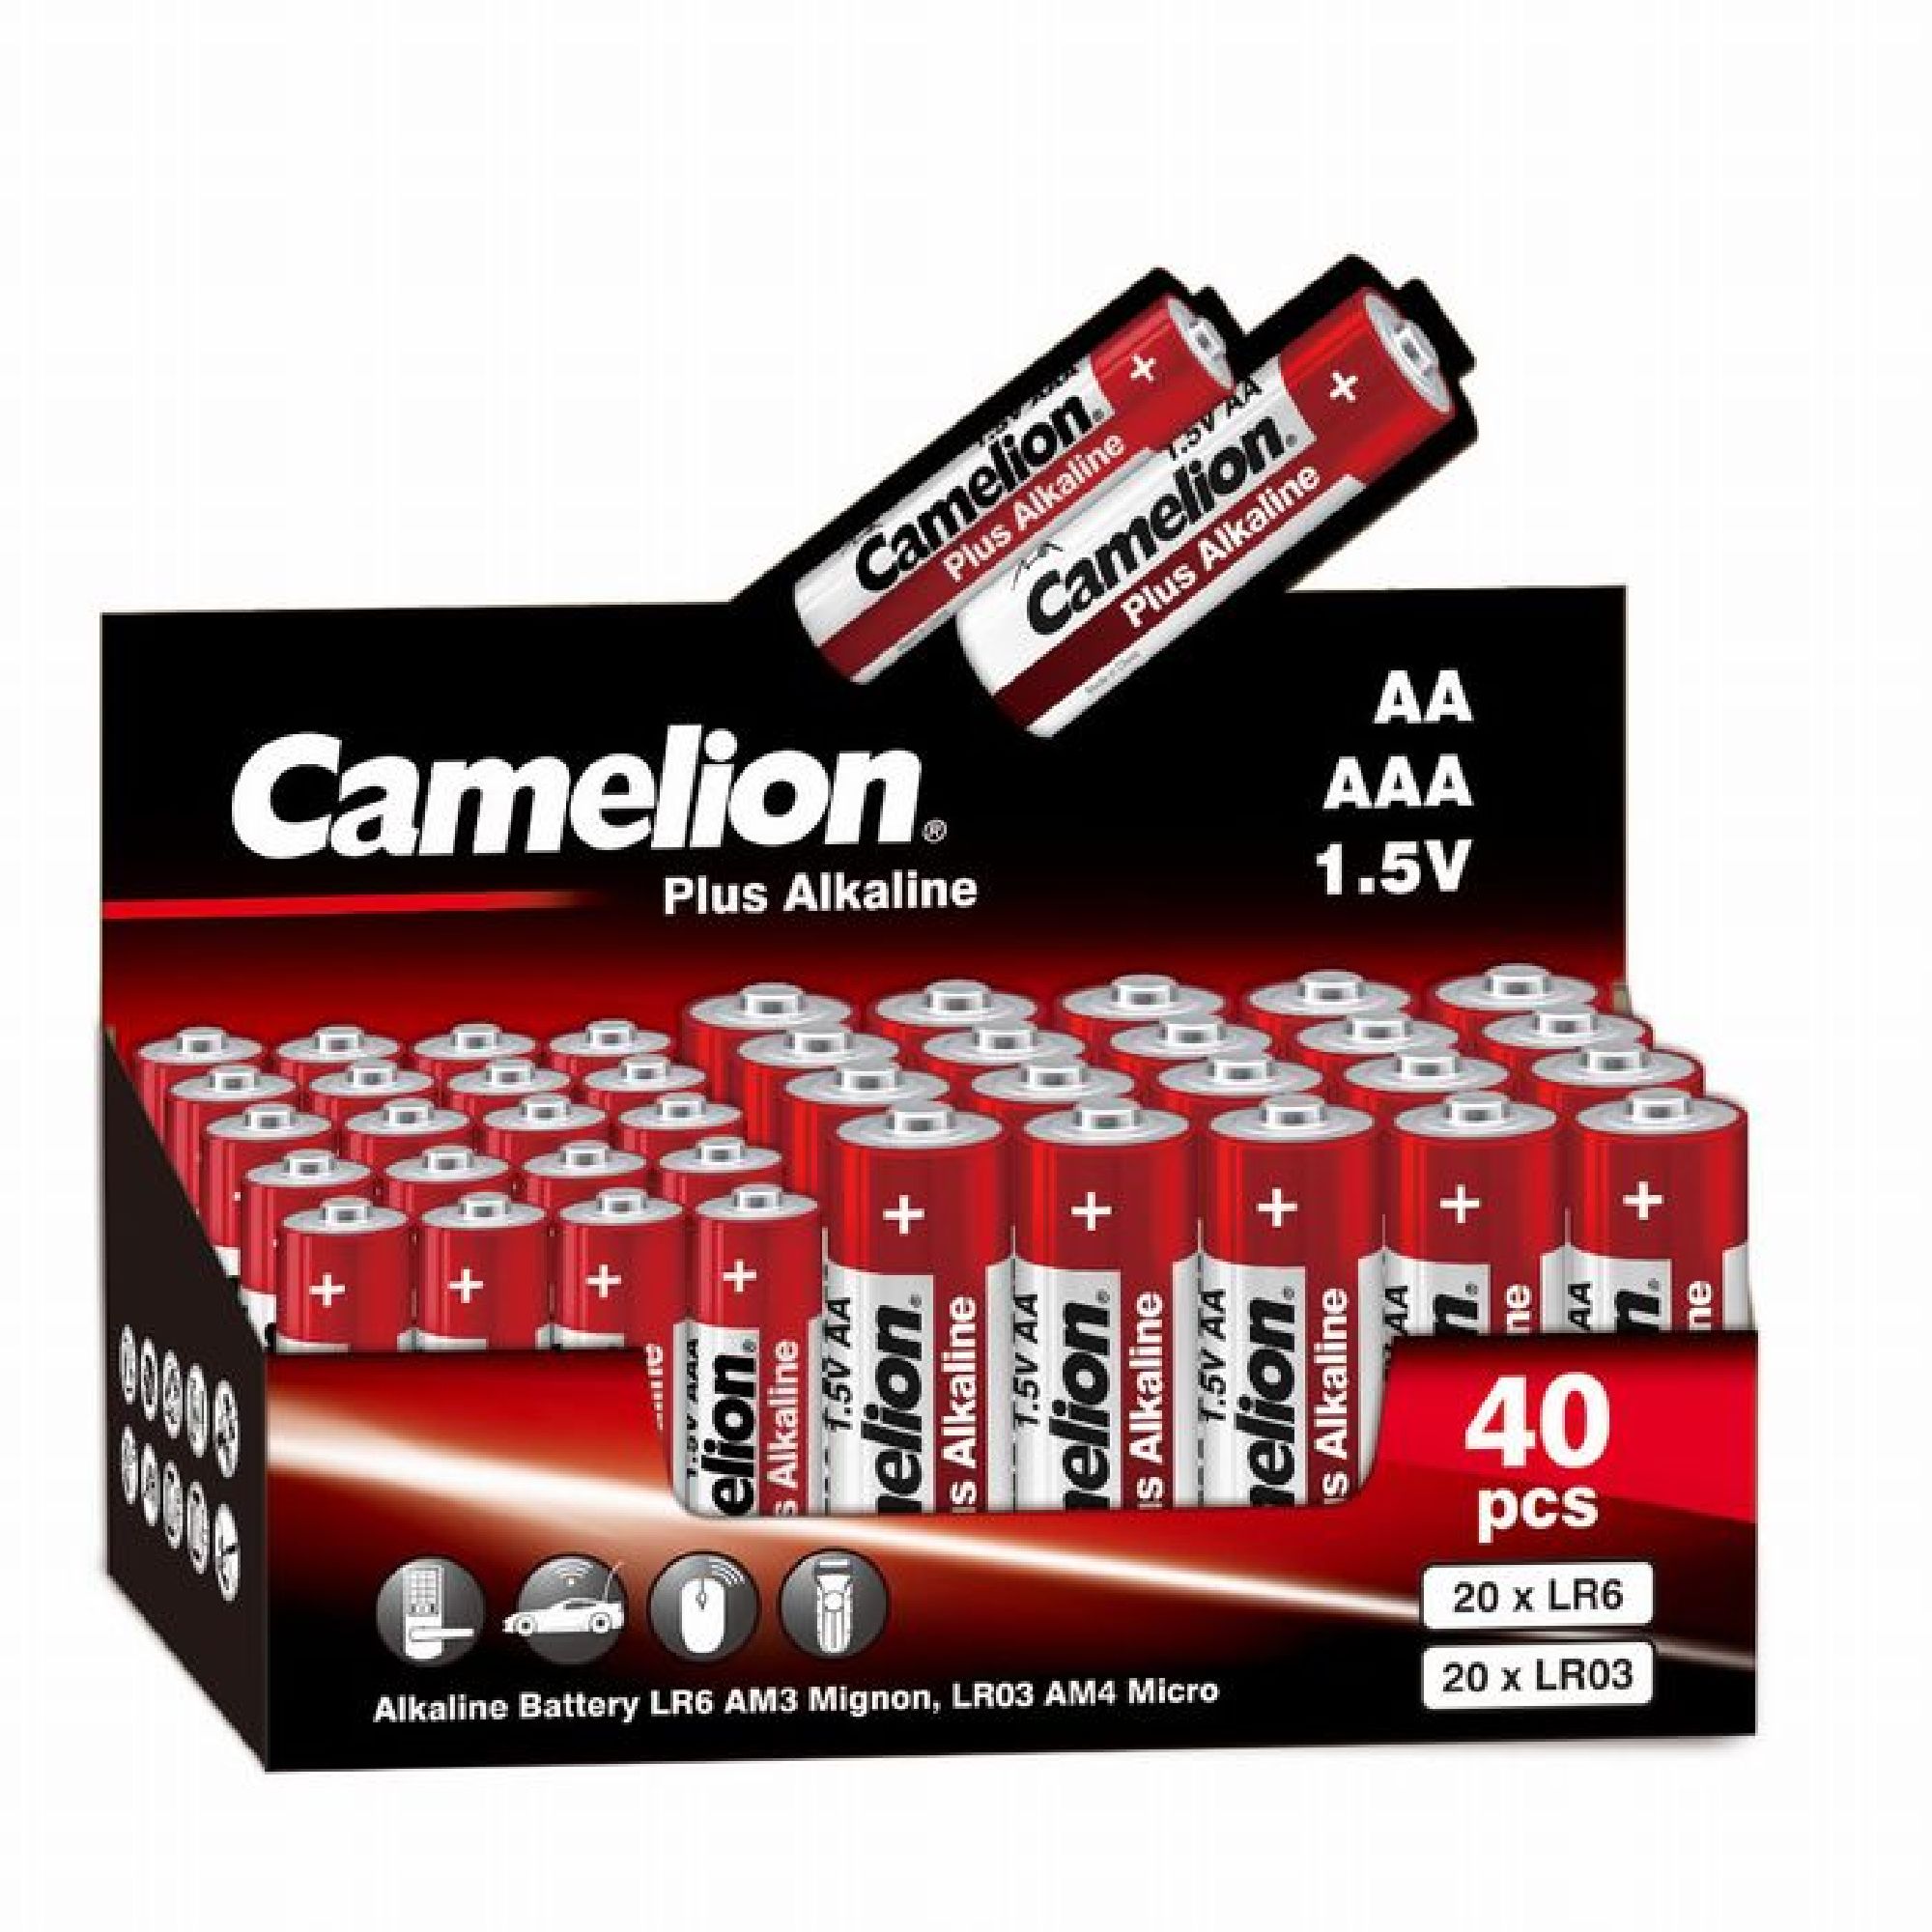 Батарейка Camelion Plus Alkaline 20LR6+20LR03-CB AA+AAA, 1,5V, 40 шт.